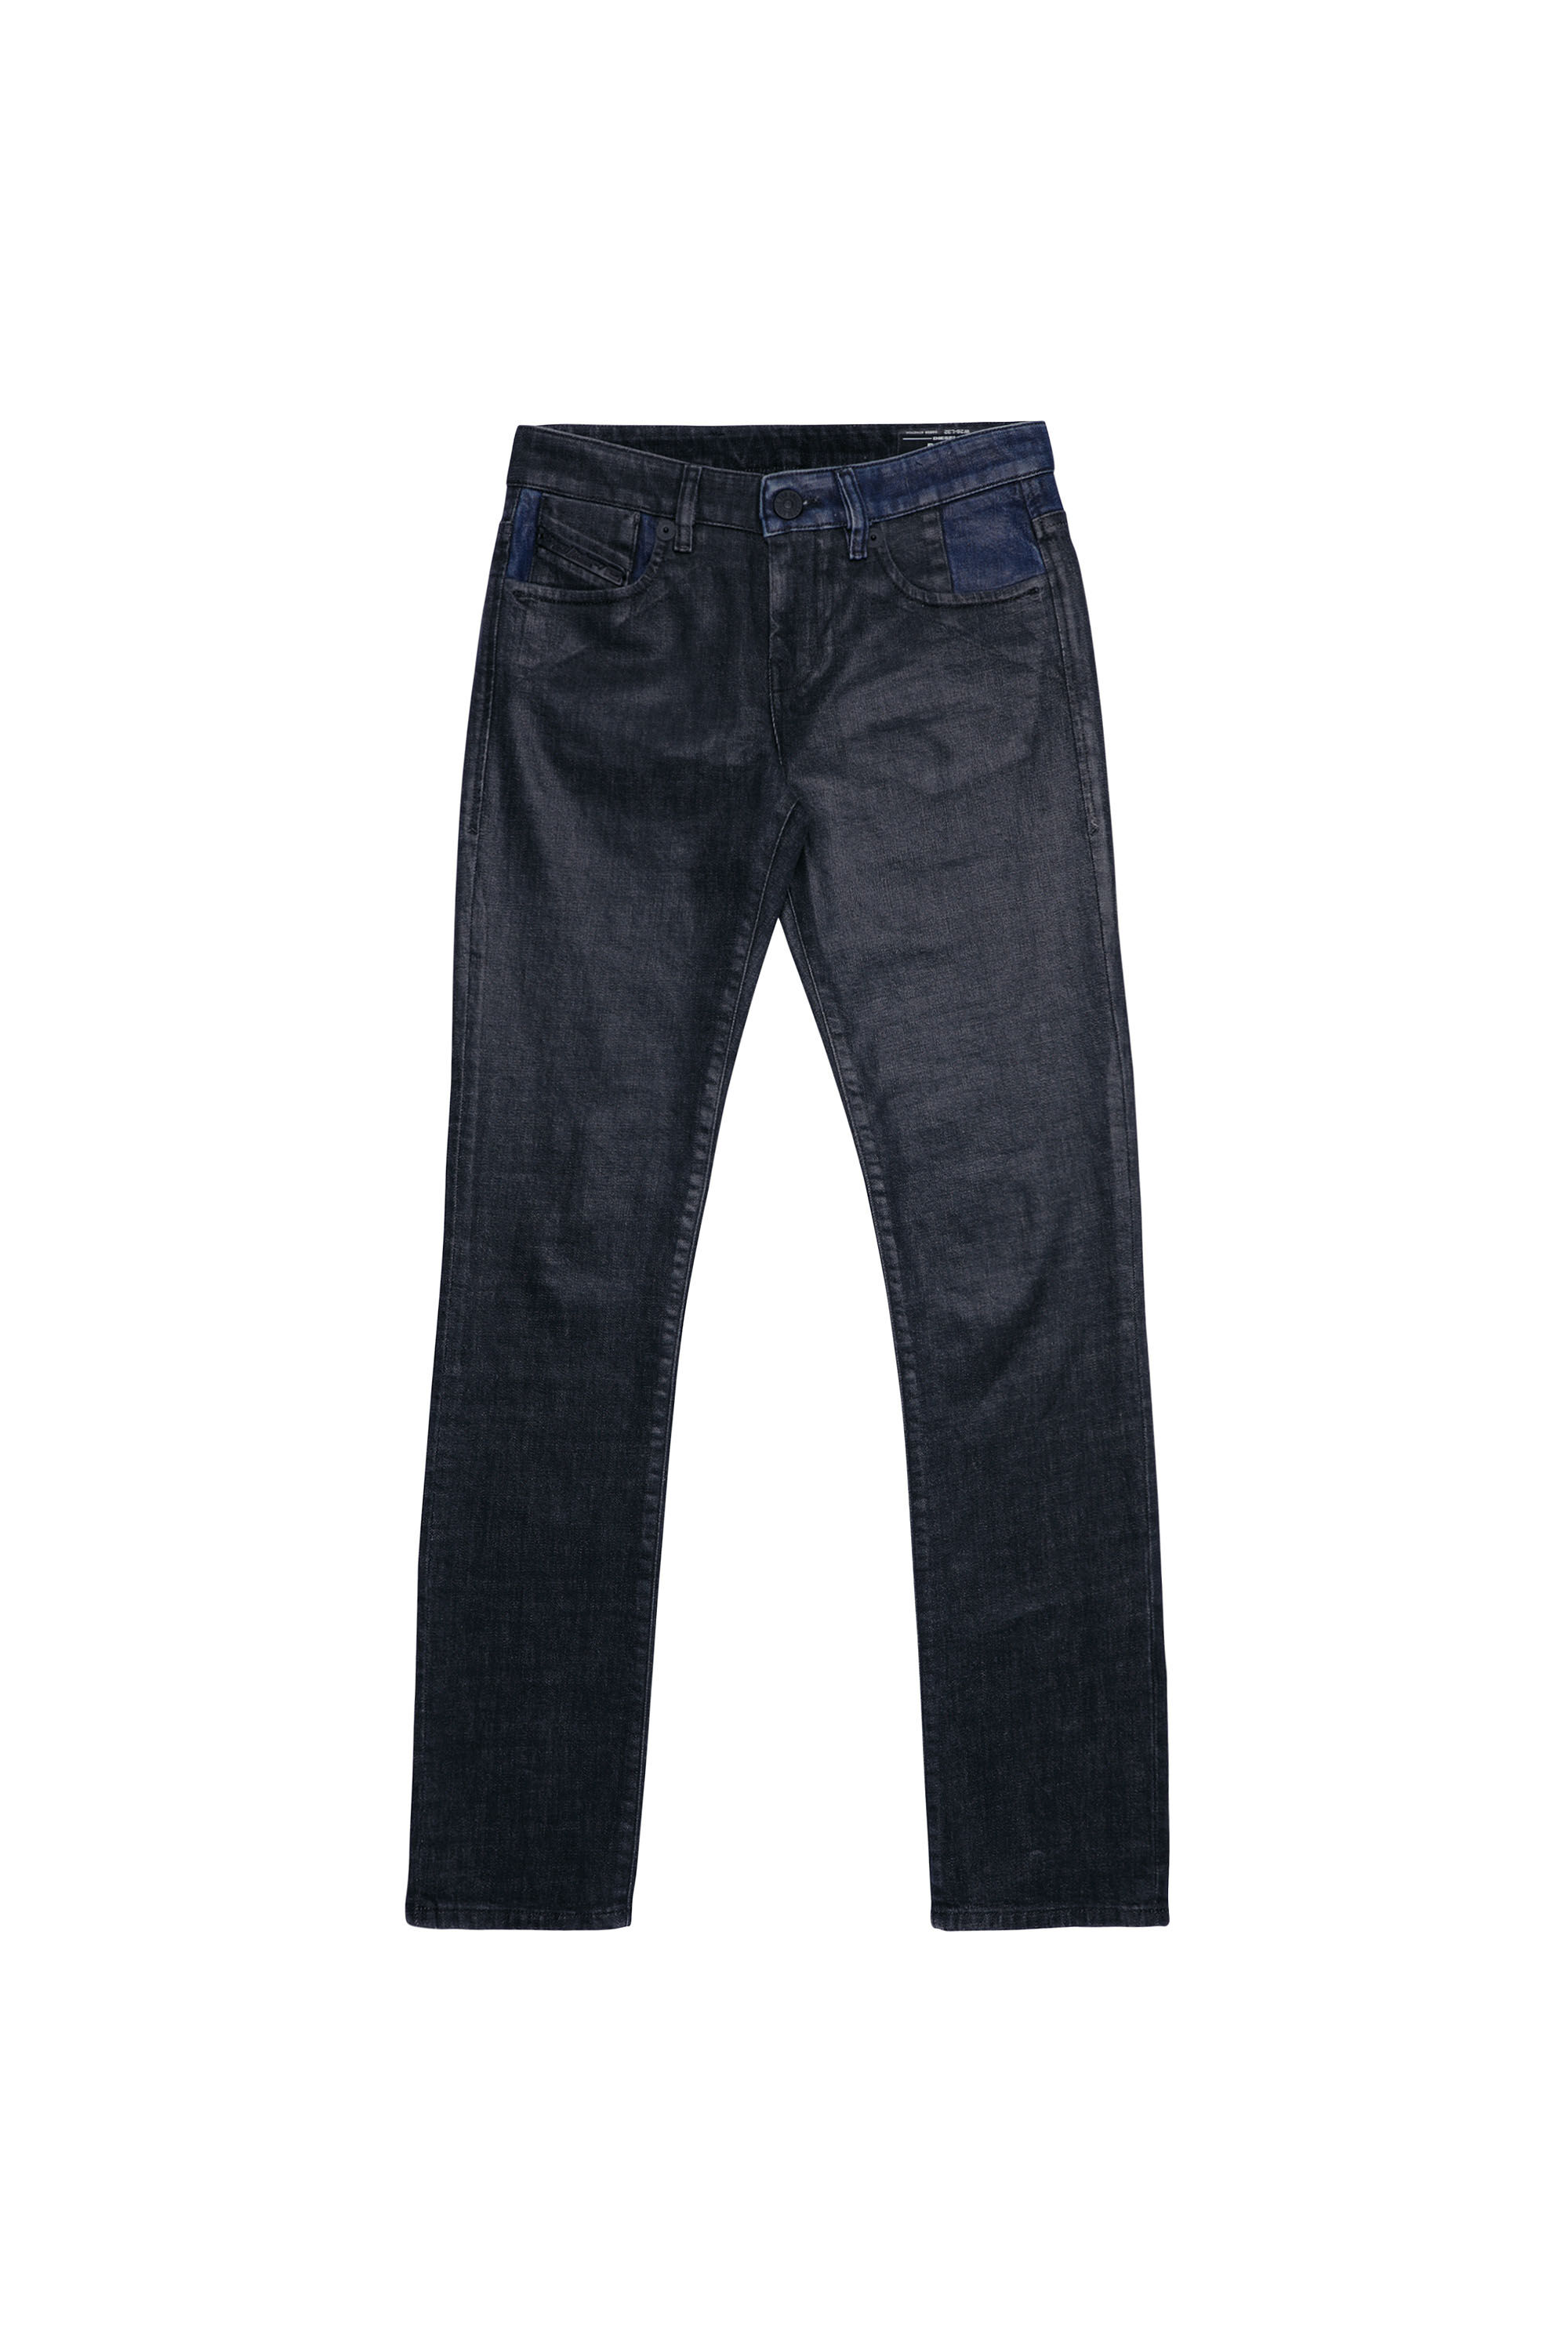 Diesel - D-Lyla Slim Jeans 09B59, Black/Dark grey - Image 2